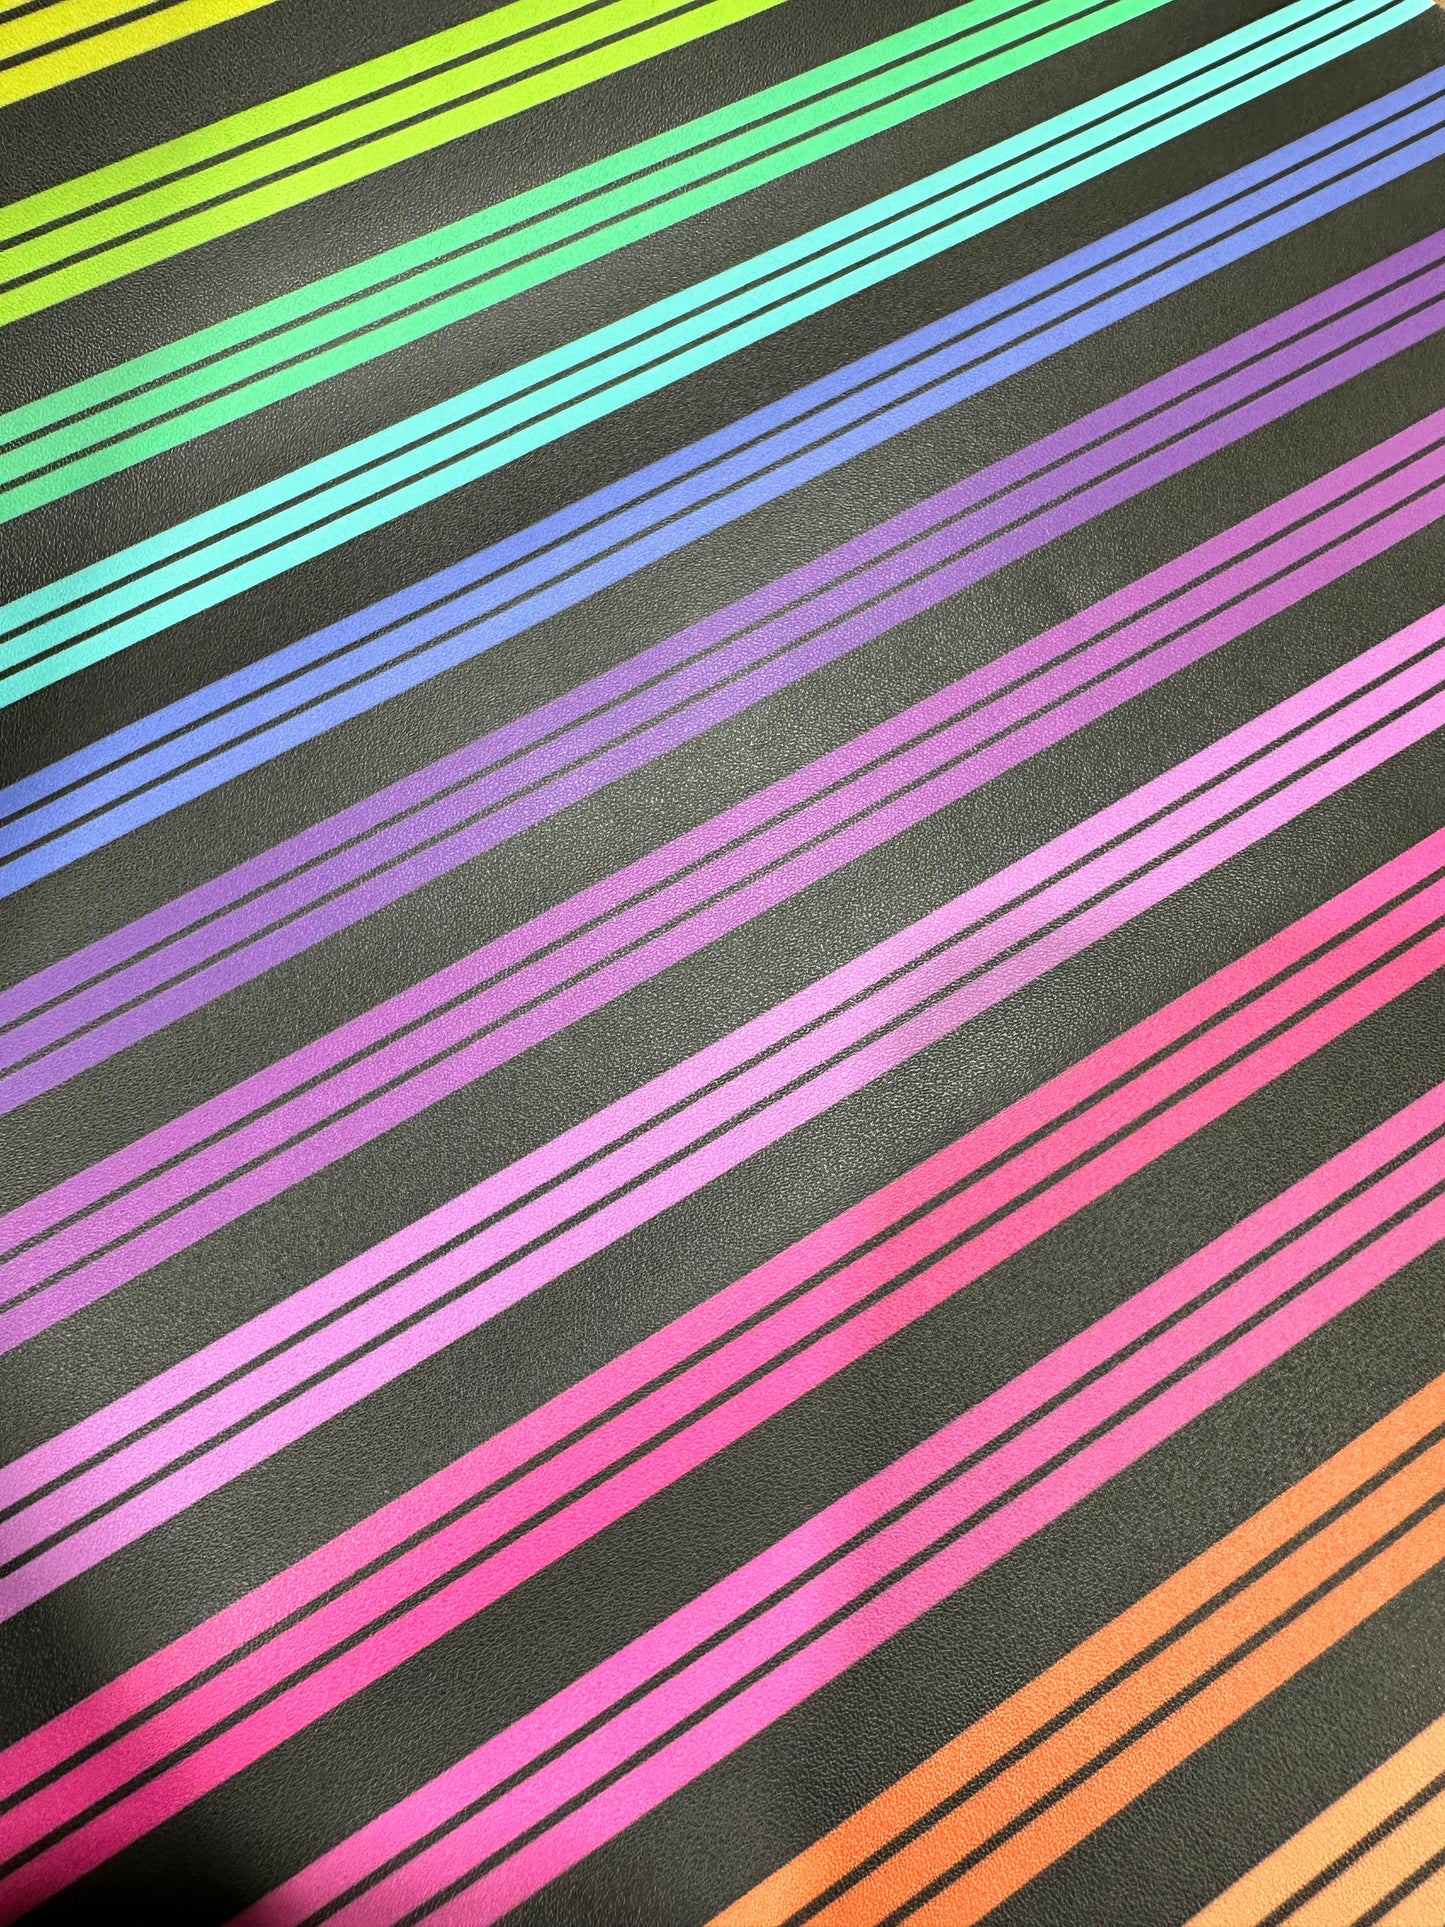 Bright Rainbow Stripe Smooth vinyl